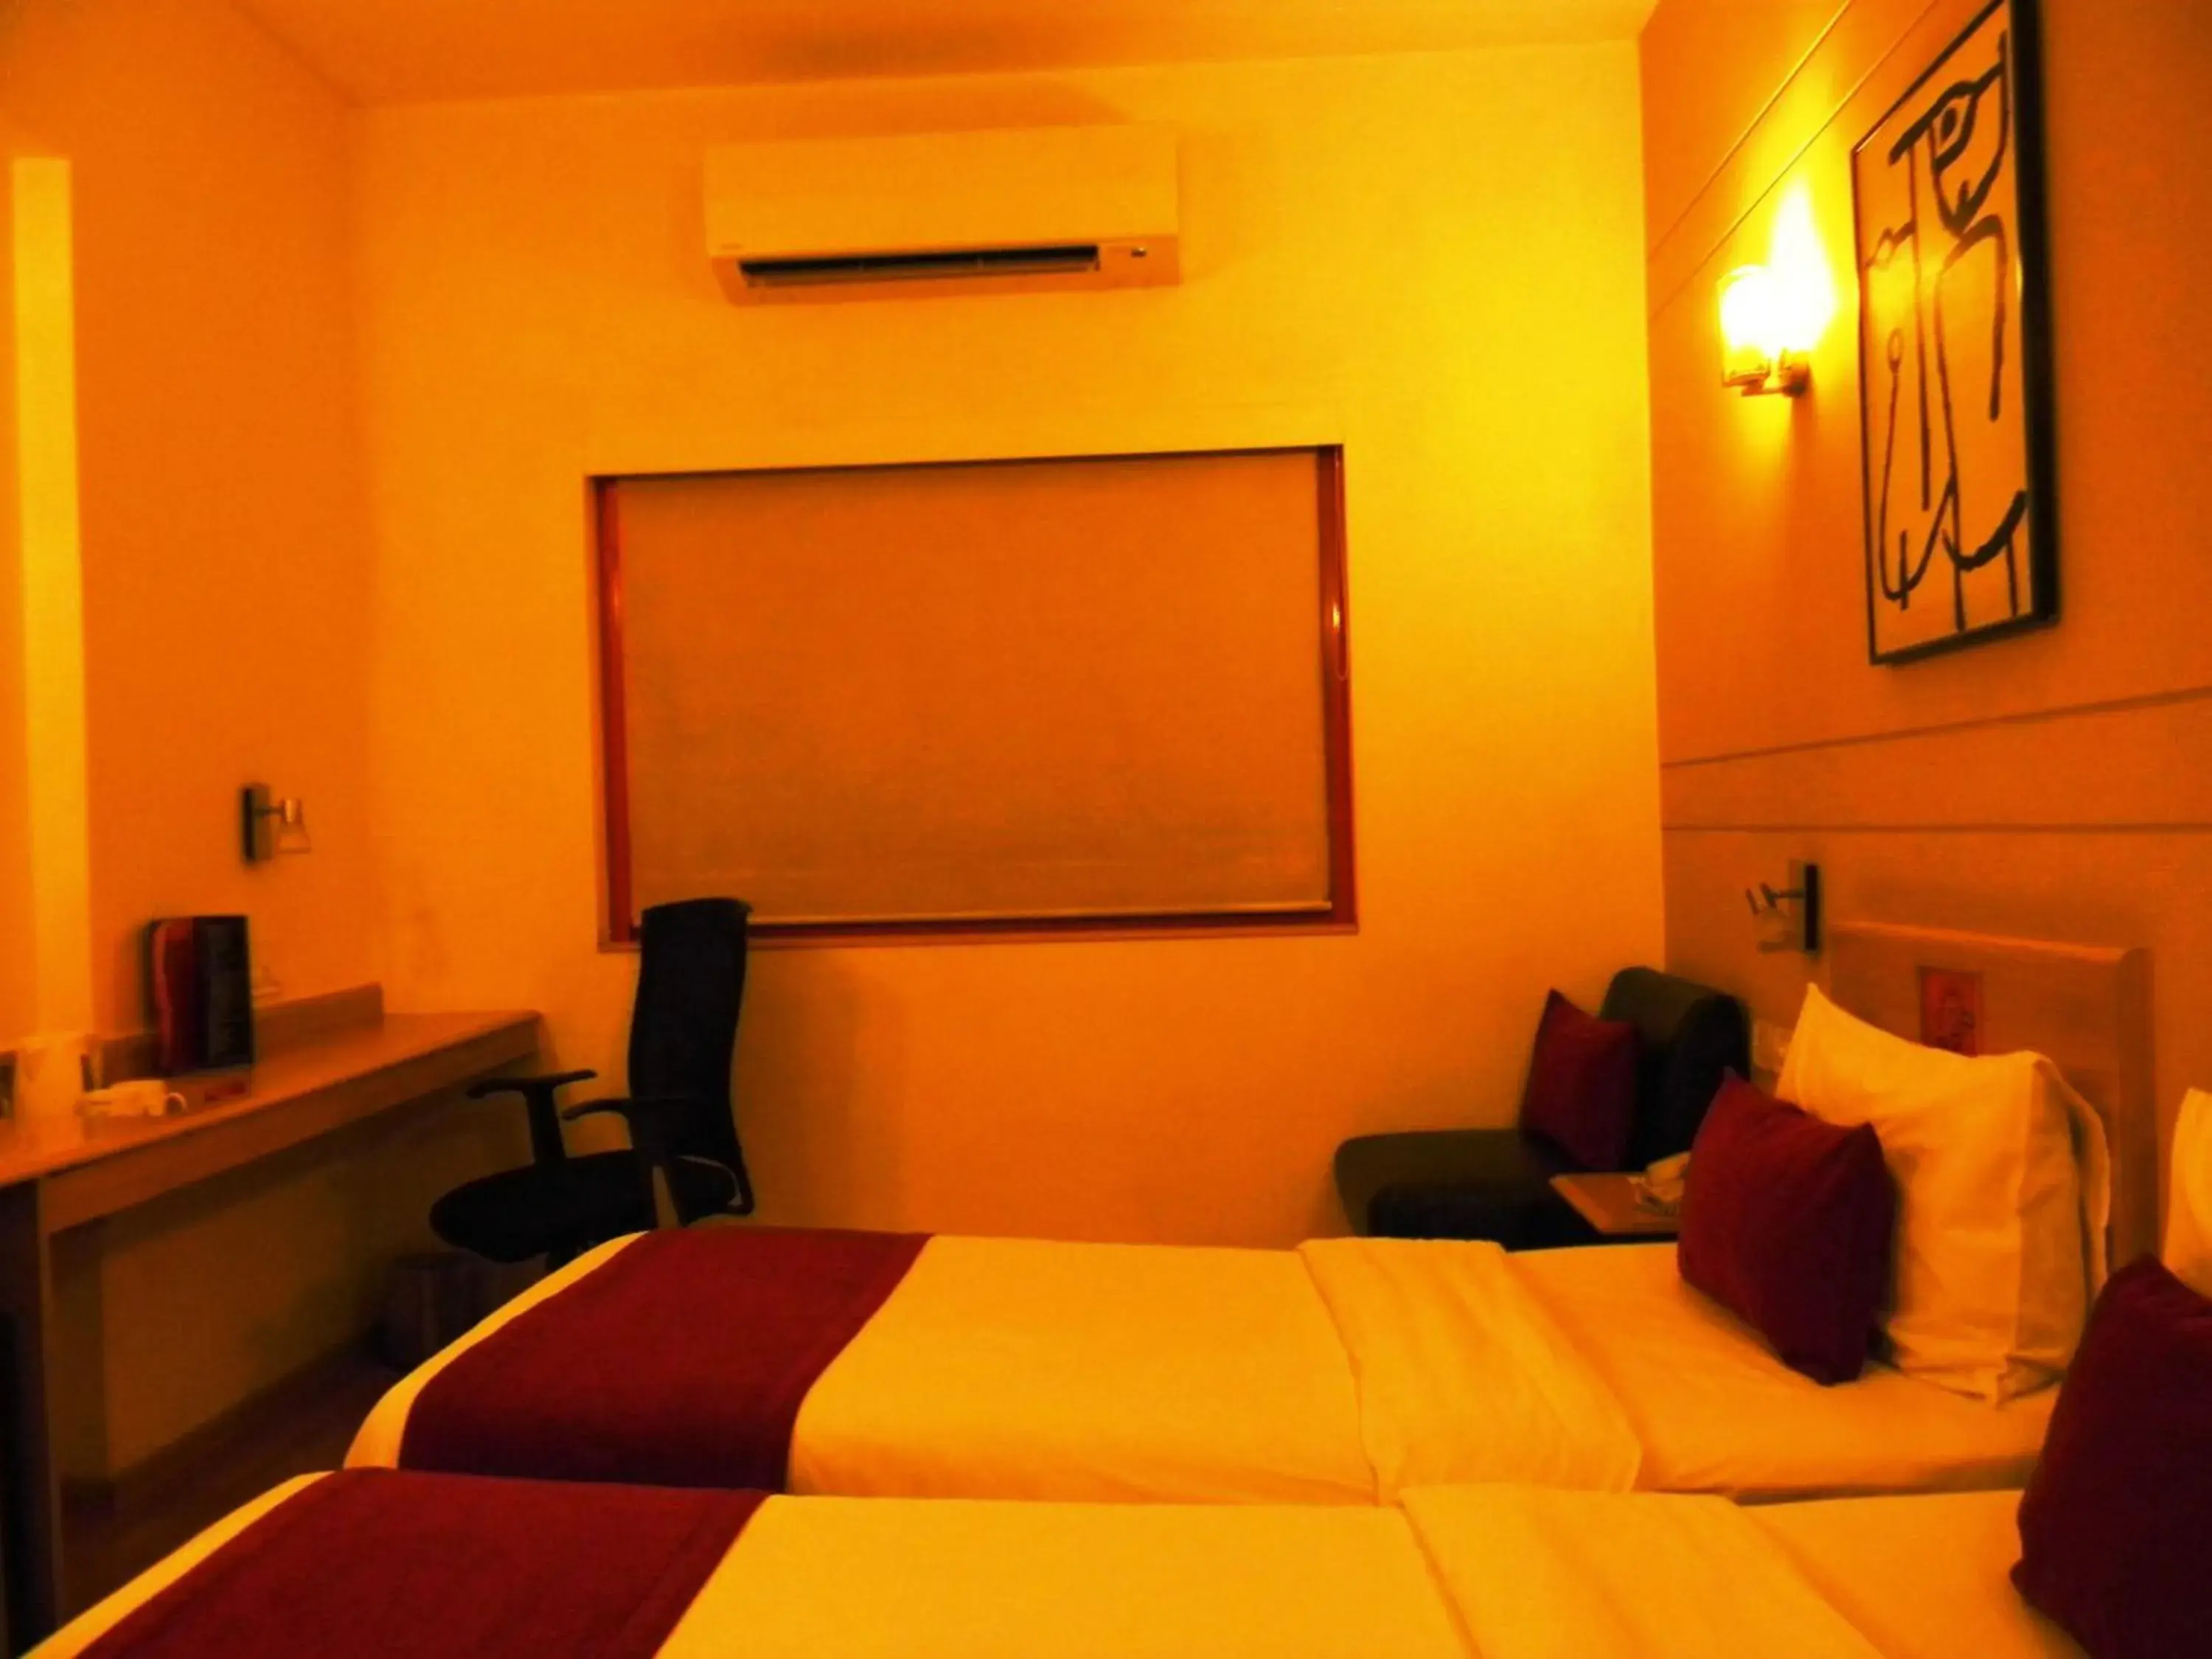 Bedroom, Bed in Red Fox Hotel, East Delhi